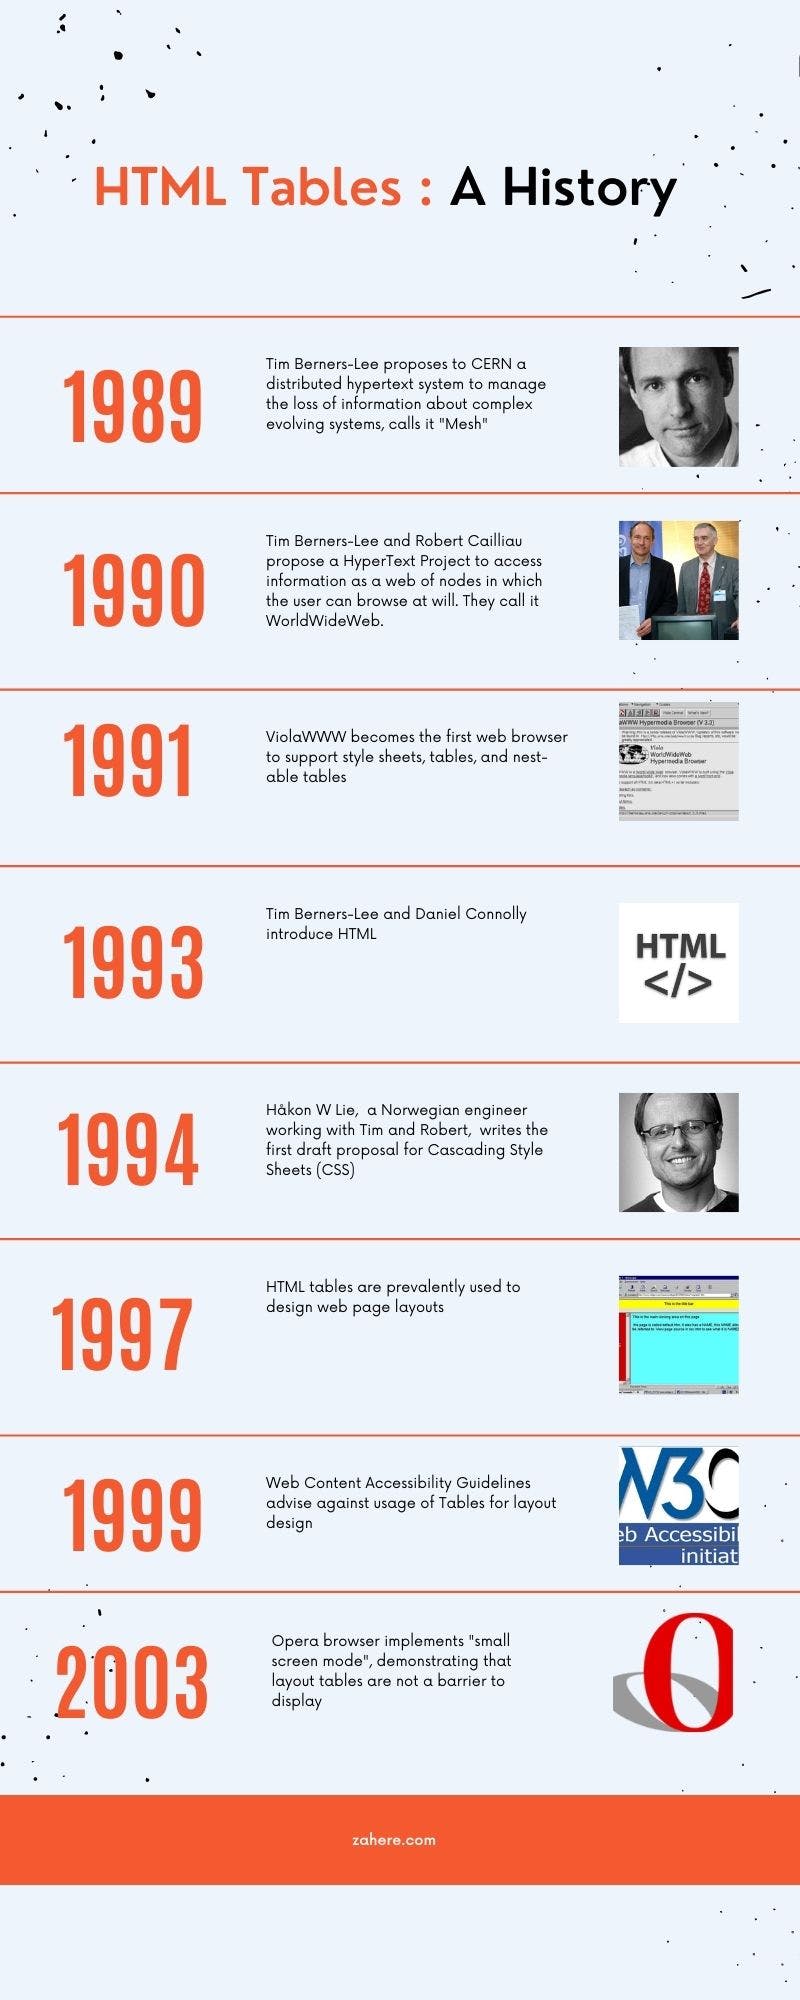 Orange Photo Clean & Corporate Organization History Timeline Infographic.jpg